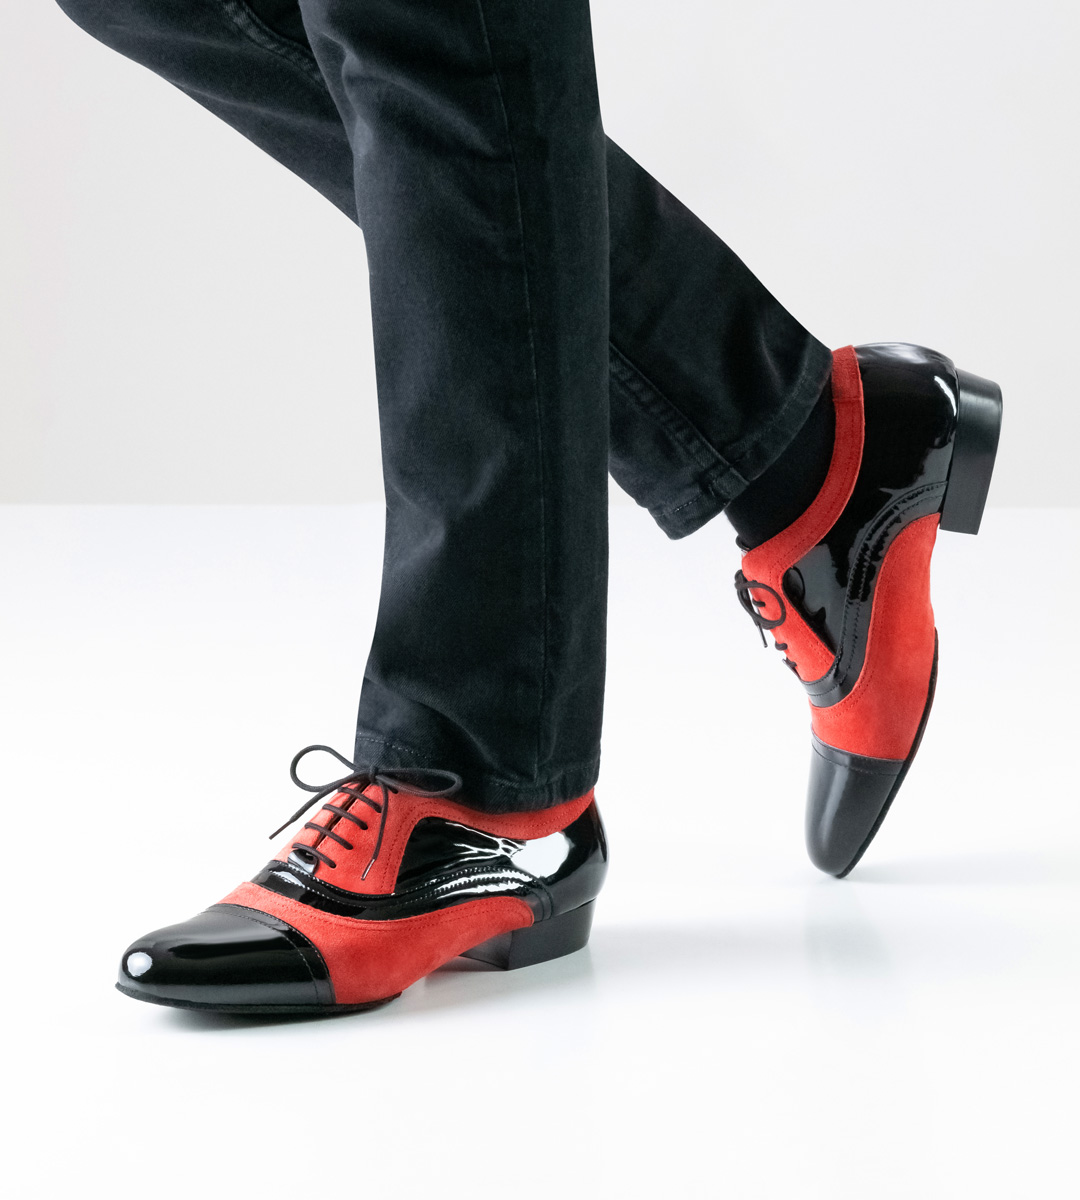 Black and red men's dance shoe with split sole by Nueva Epoca